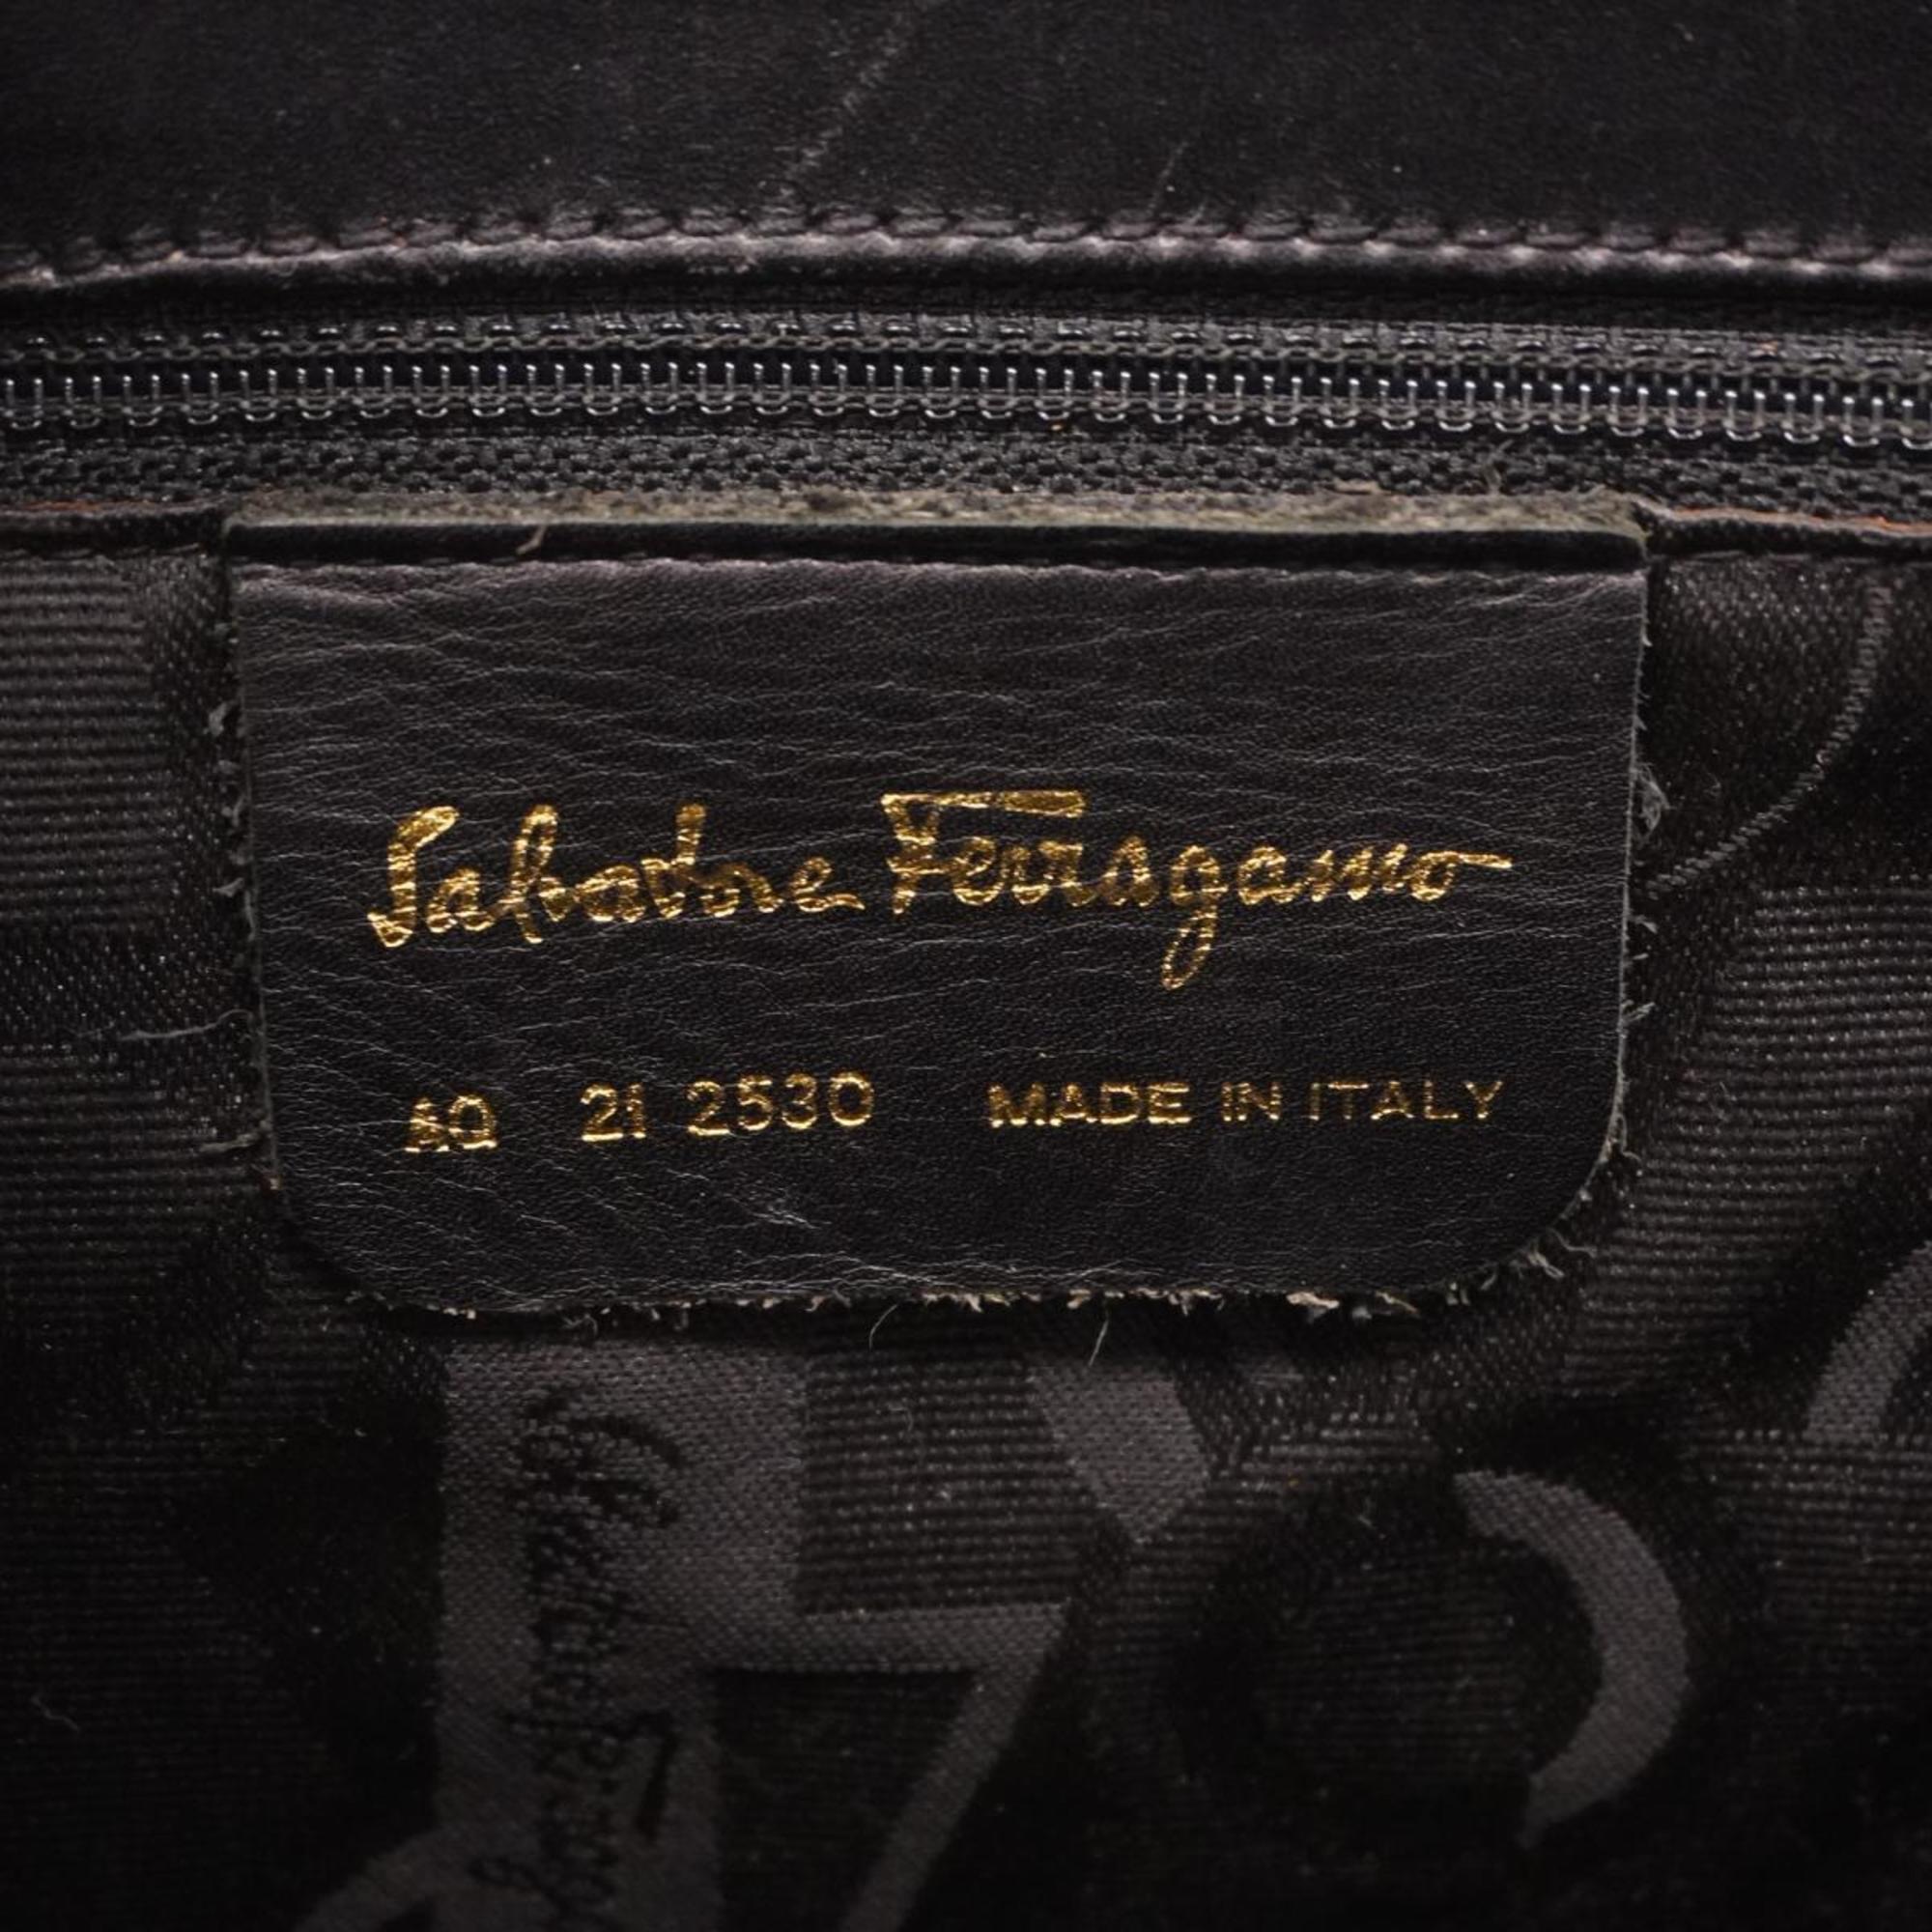 Salvatore Ferragamo Vara Leather Tote Bag Black Women's